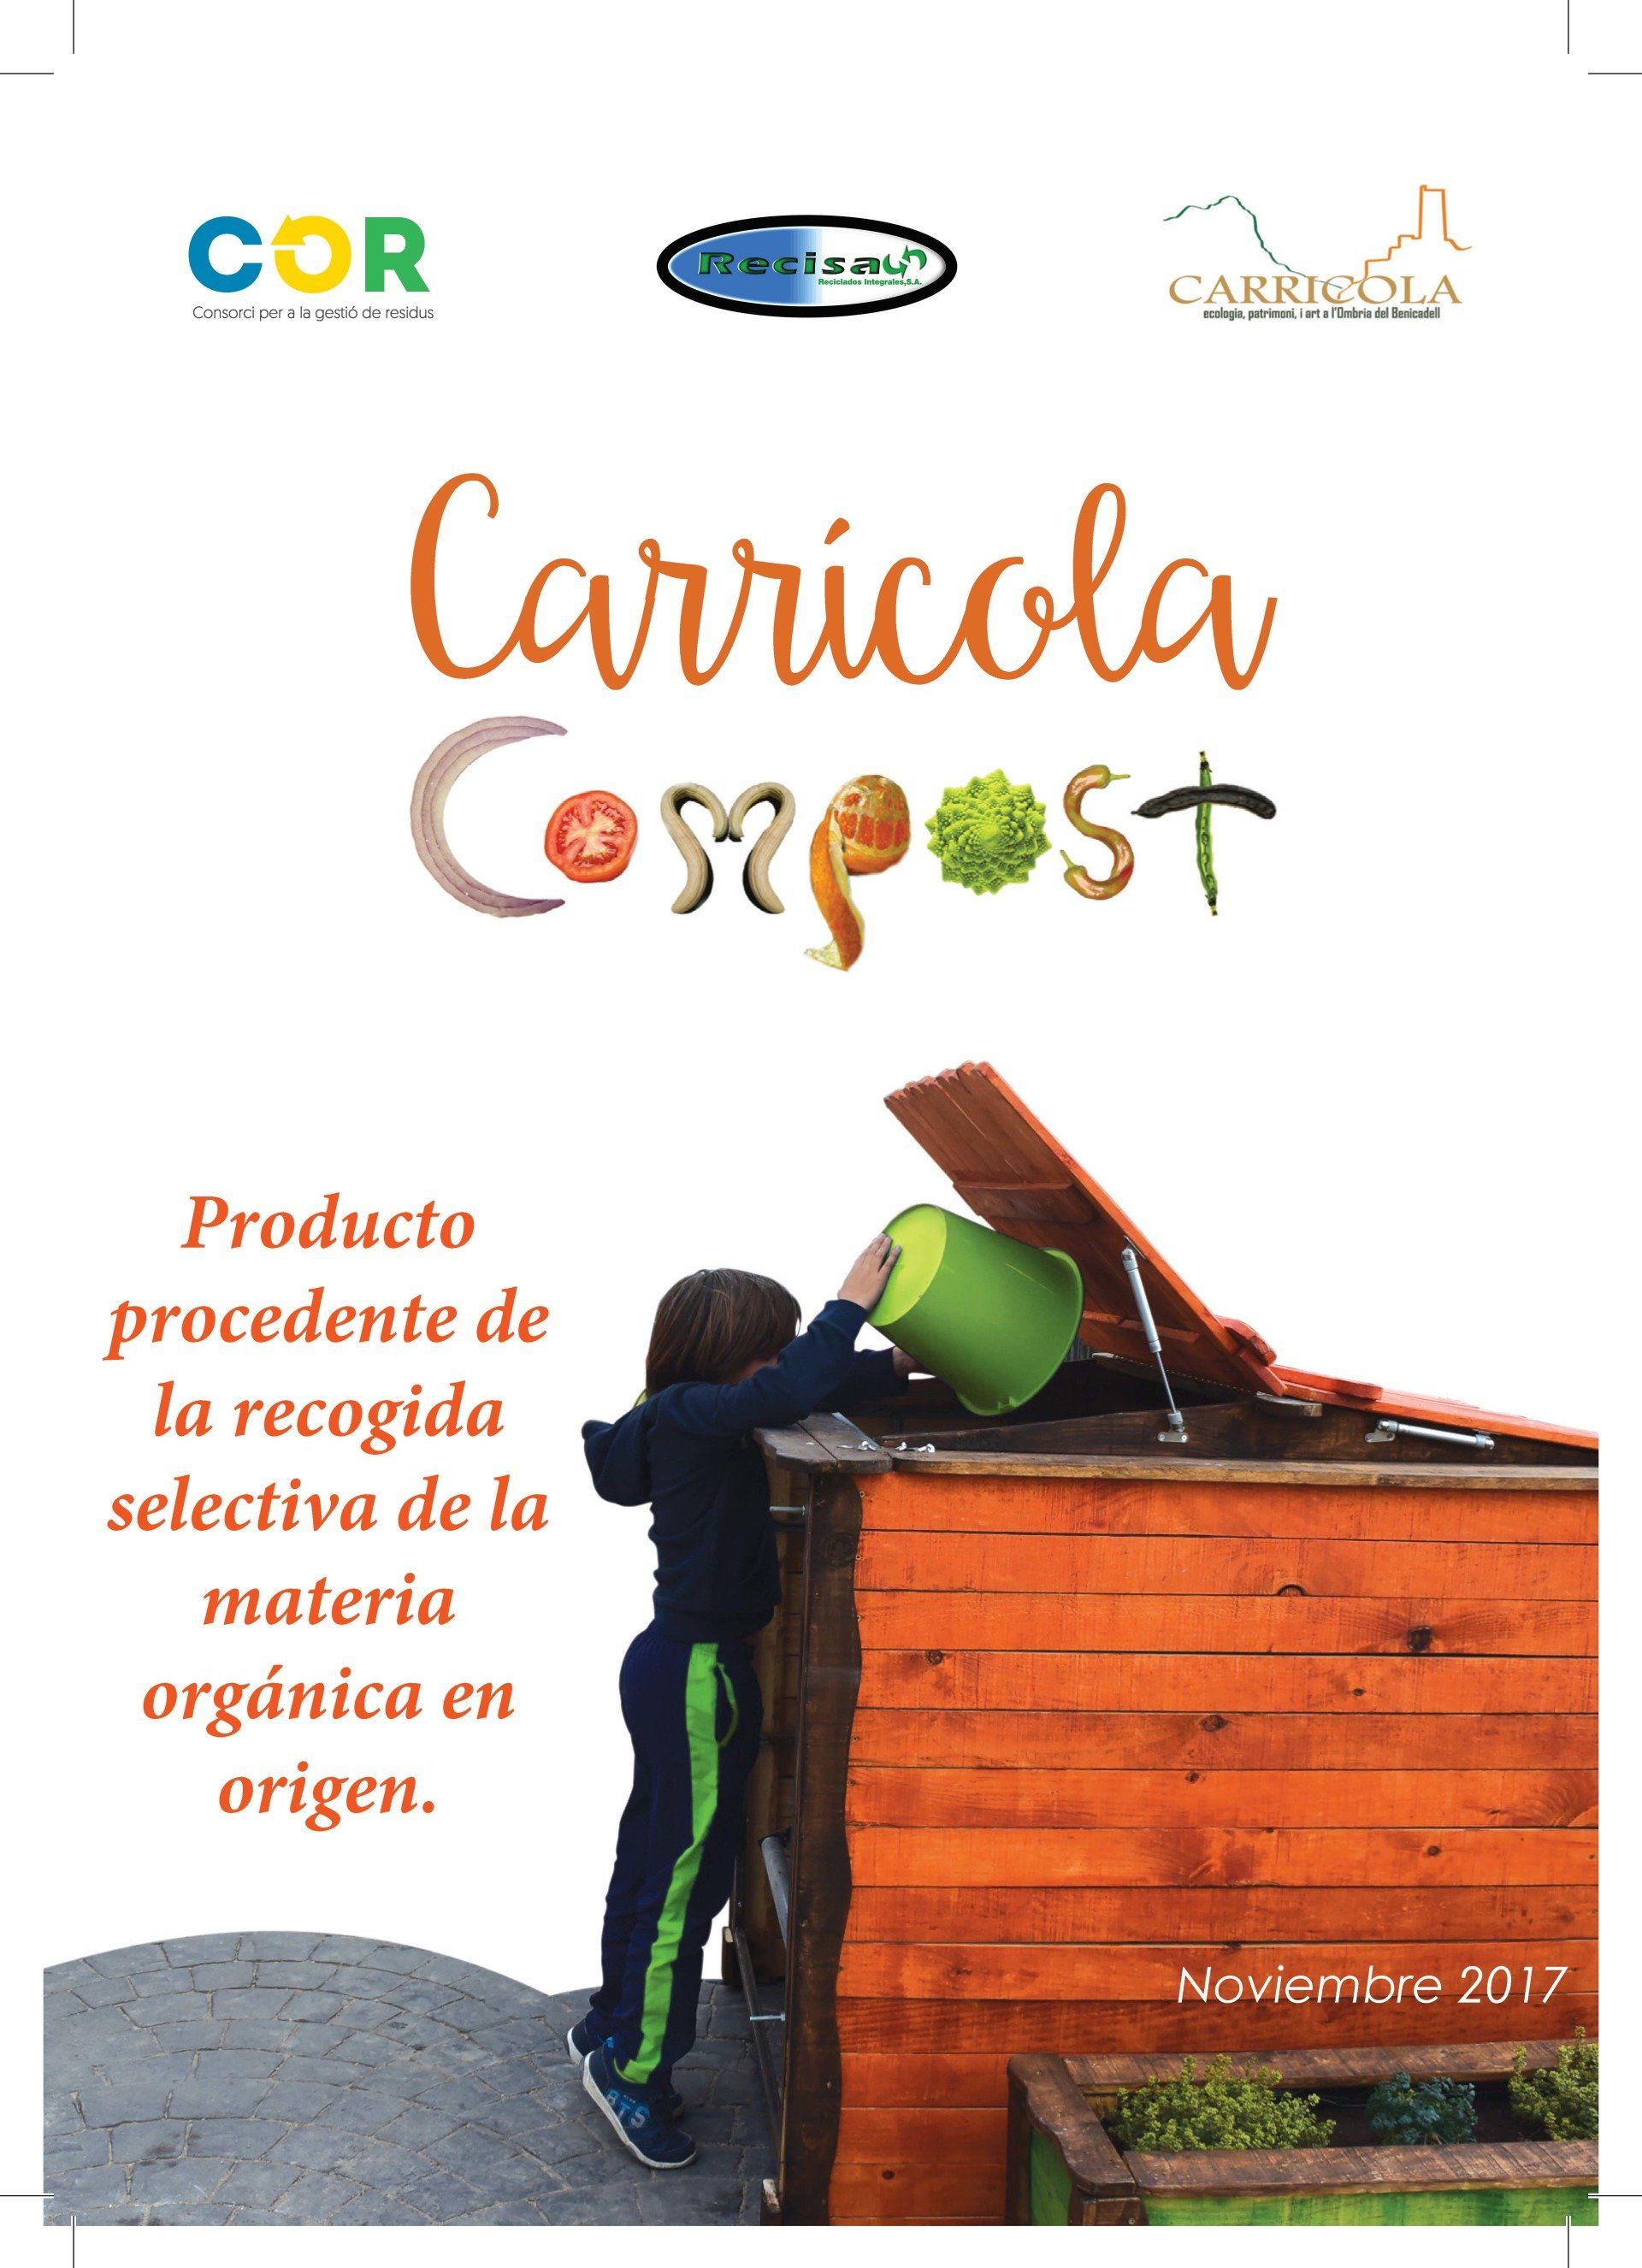 Carricola Compost Recisa 1